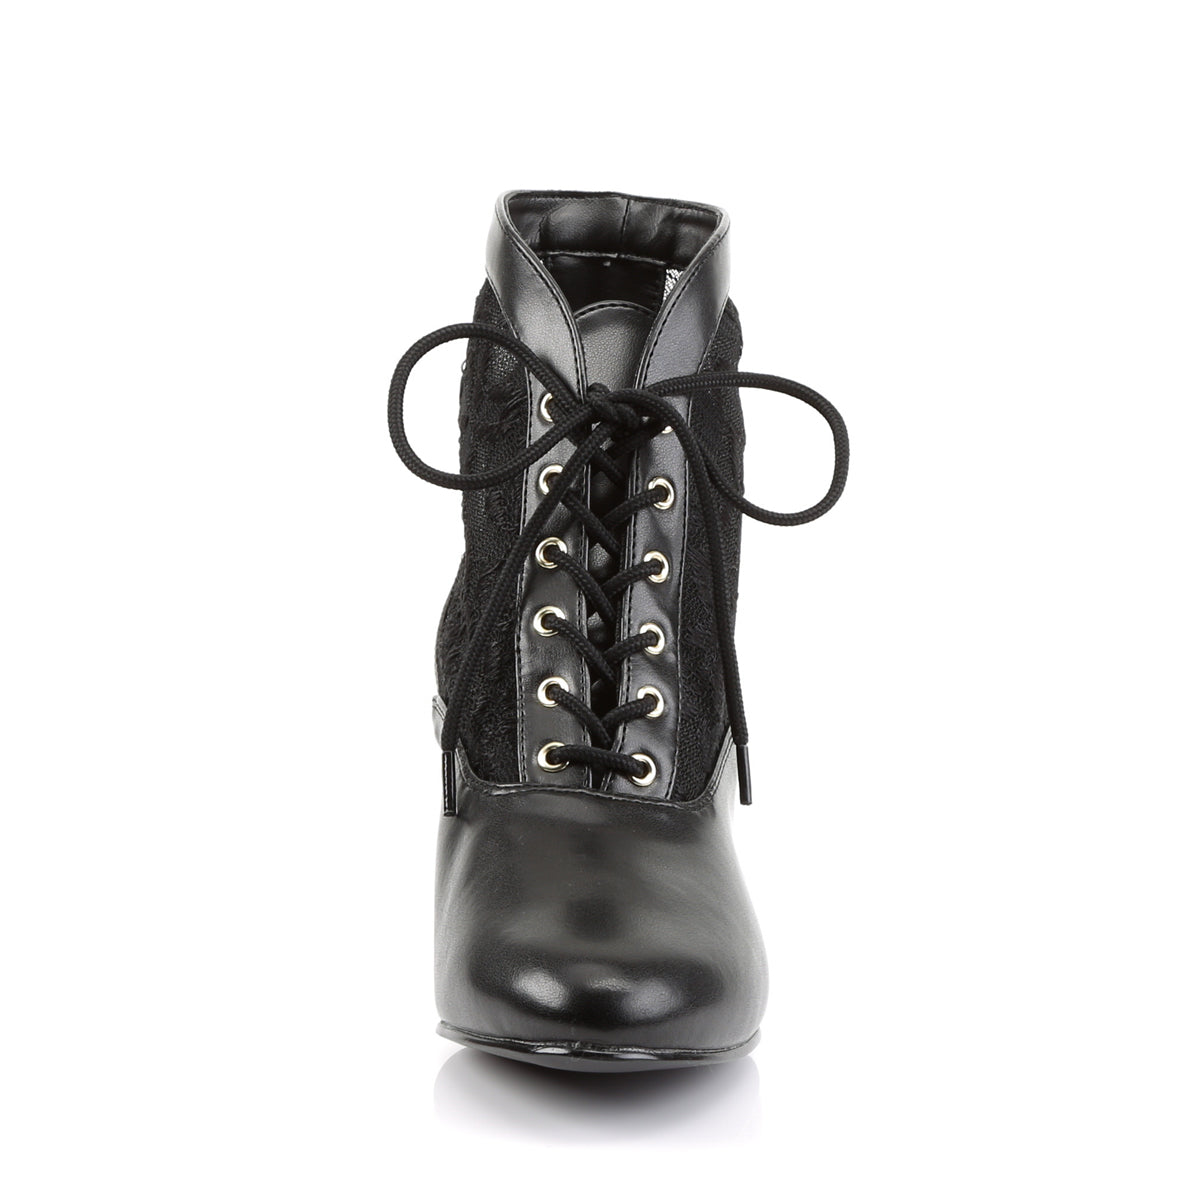 DAME-05 2 Inch Heel Black Women's Boots Funtasma Costume Shoes Alternative Footwear